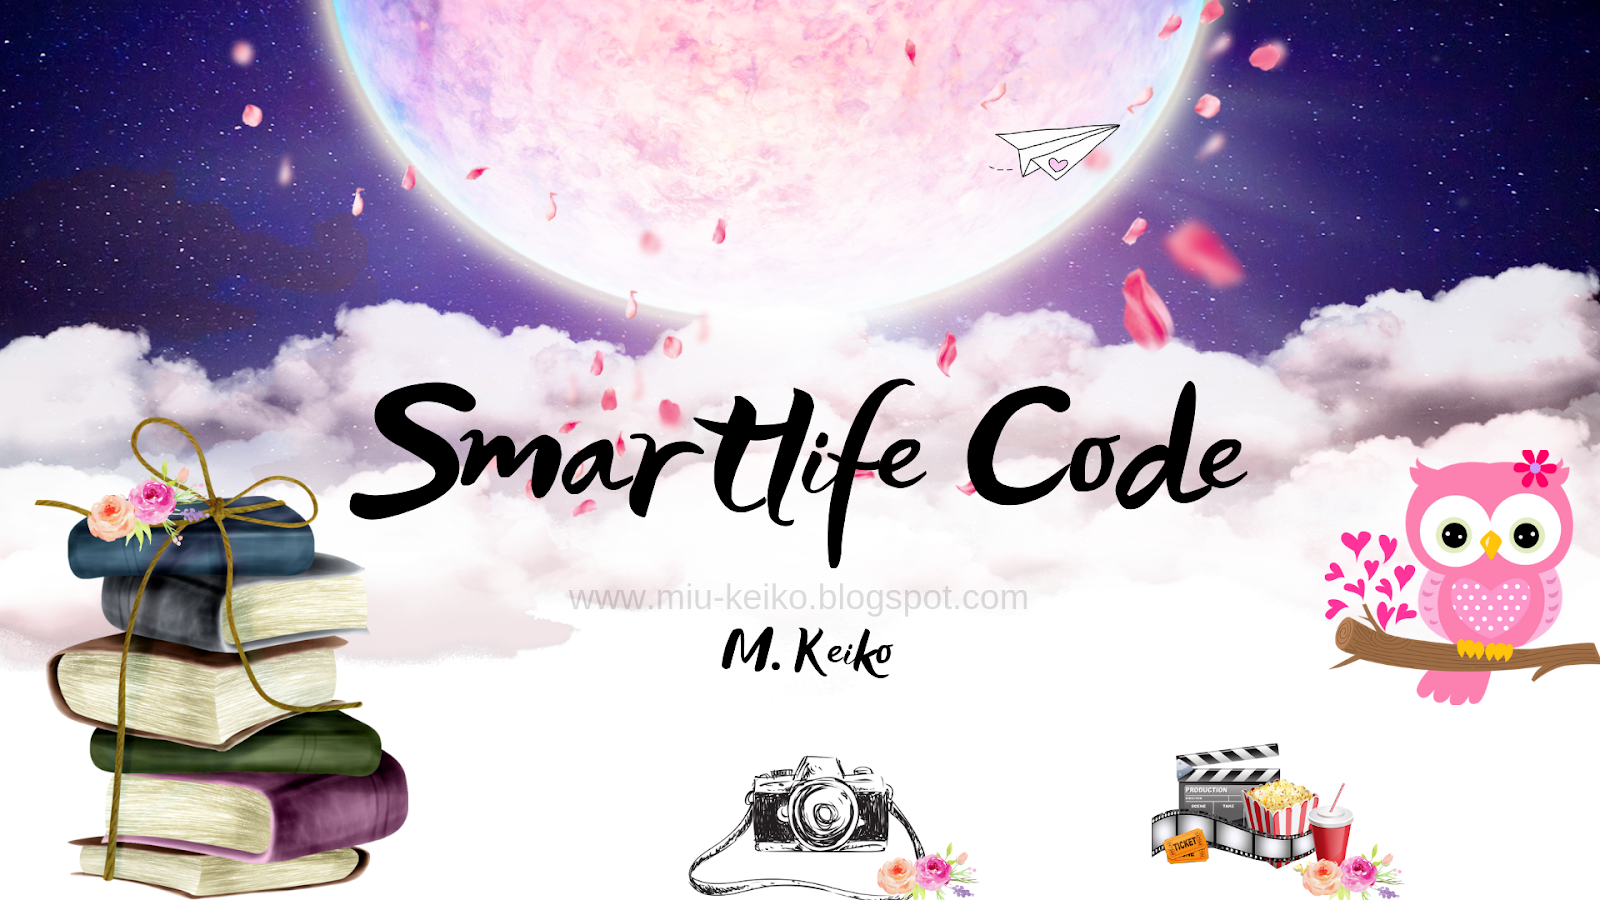 Smartlife code by M. Keiko